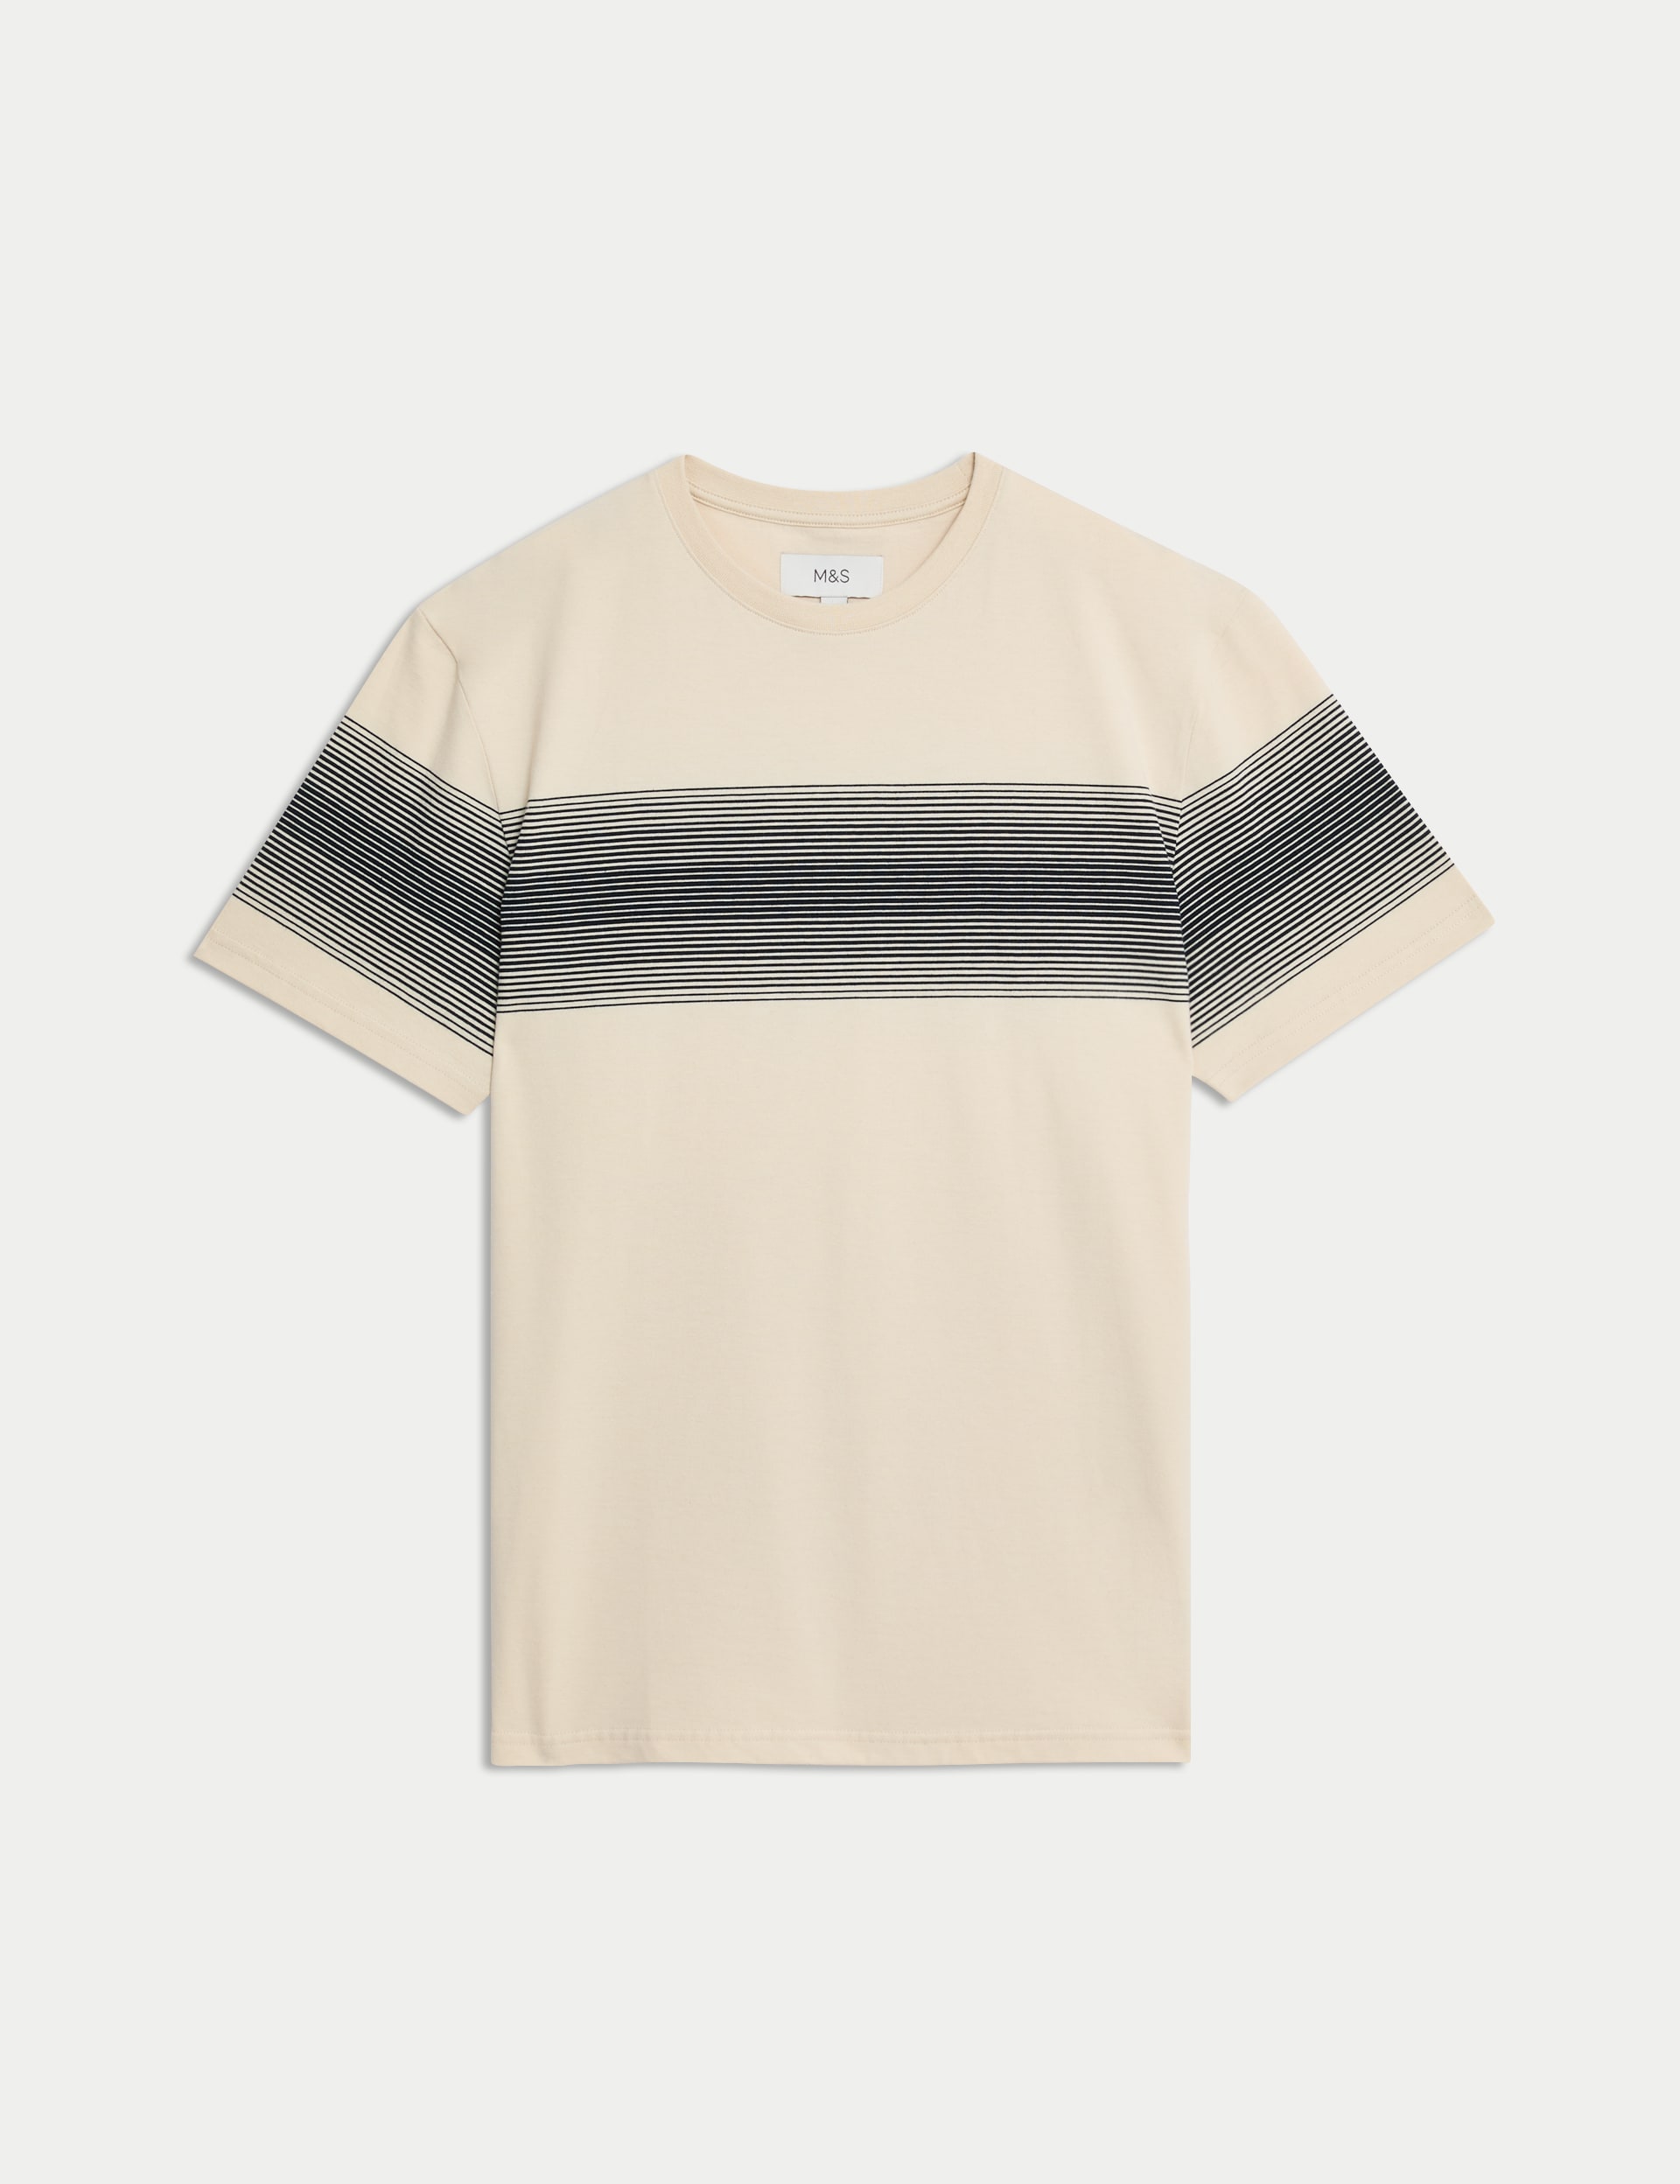 Pure Cotton Striped Crew Neck T-Shirt